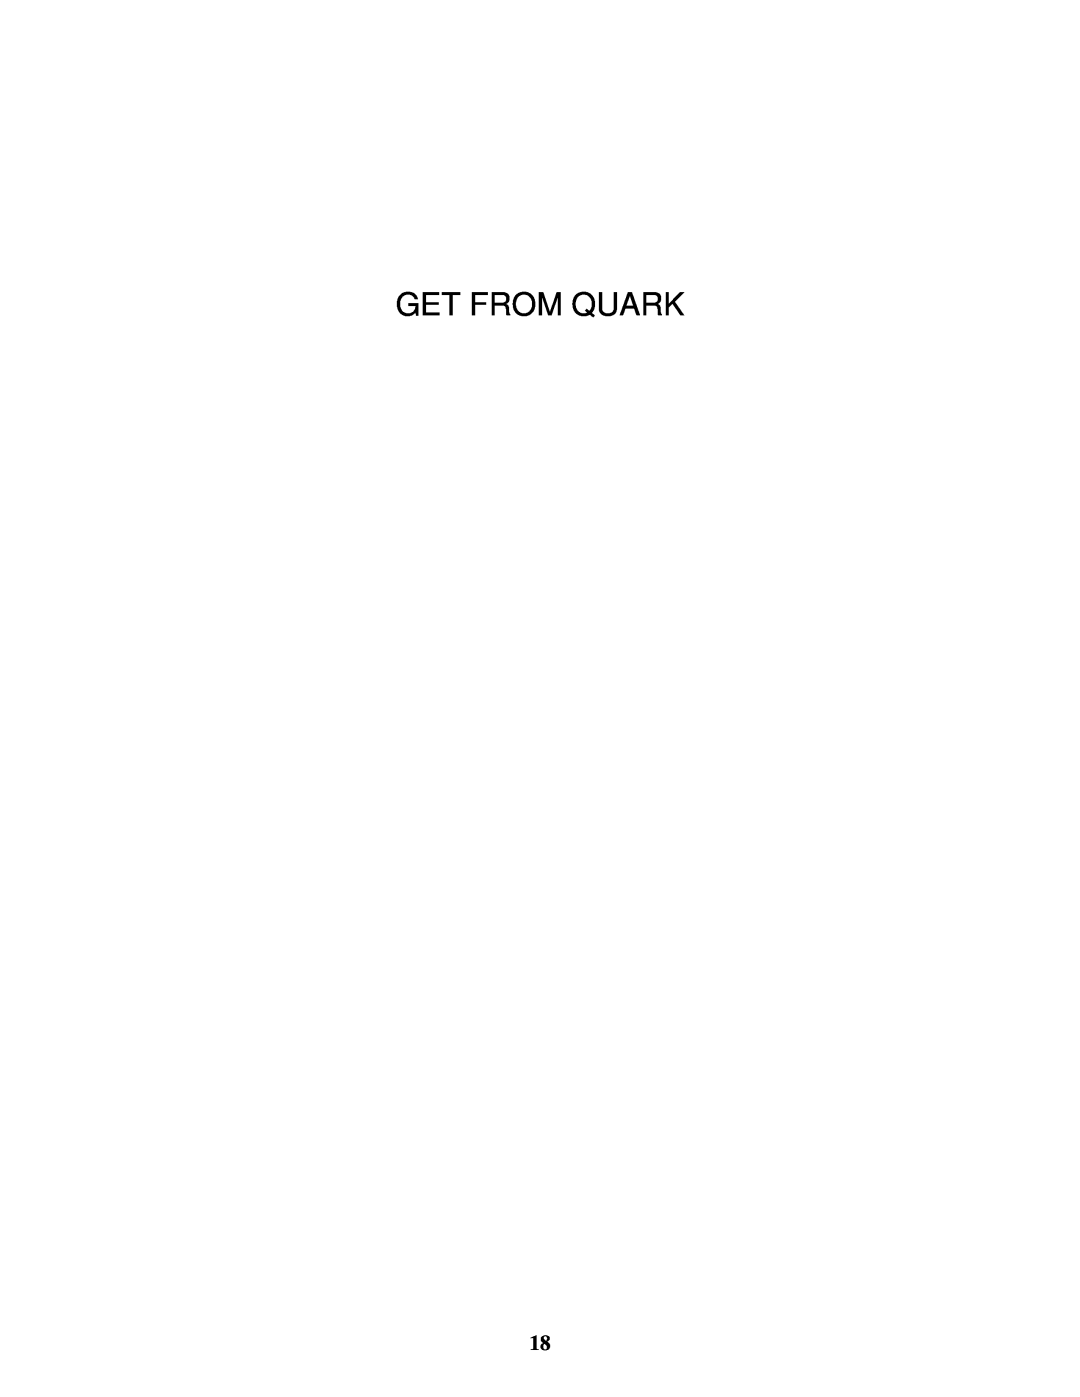 Peavey Q 215FX owner manual Get From Quark 